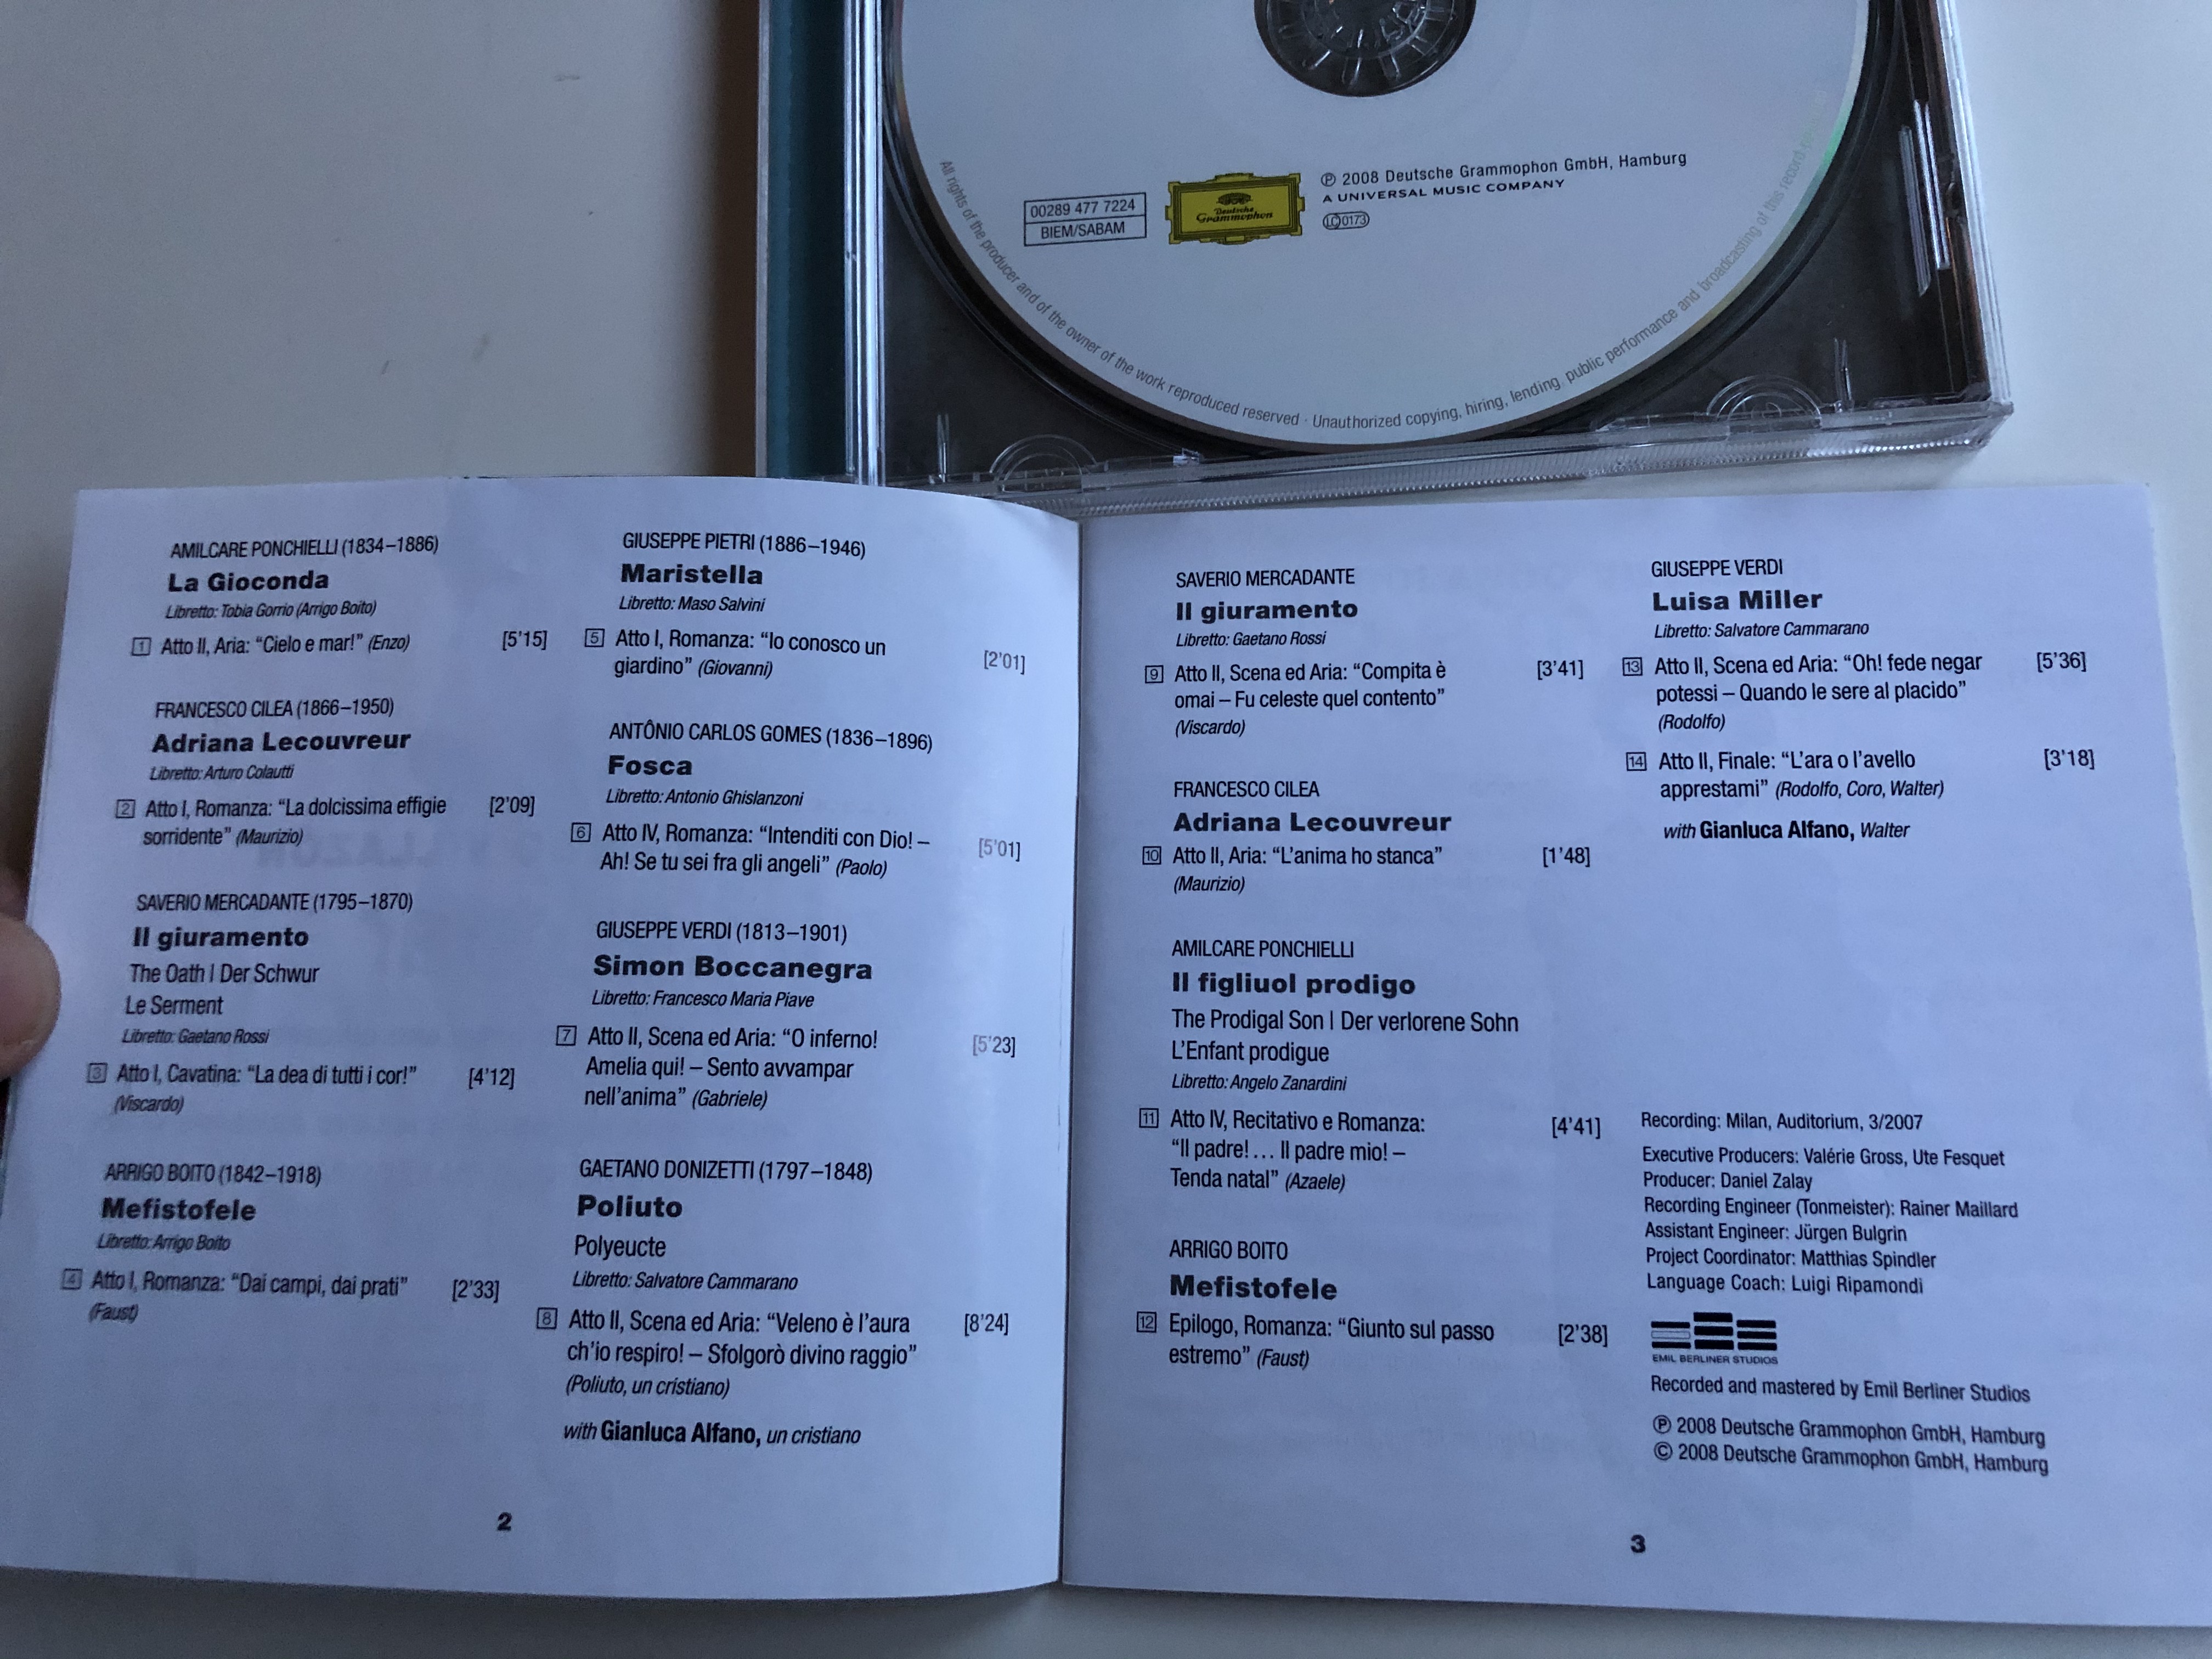 rolando-villaz-n-cielo-e-mar-deutsche-grammophon-audio-cd-2008-00289-477-7224-3-.jpg